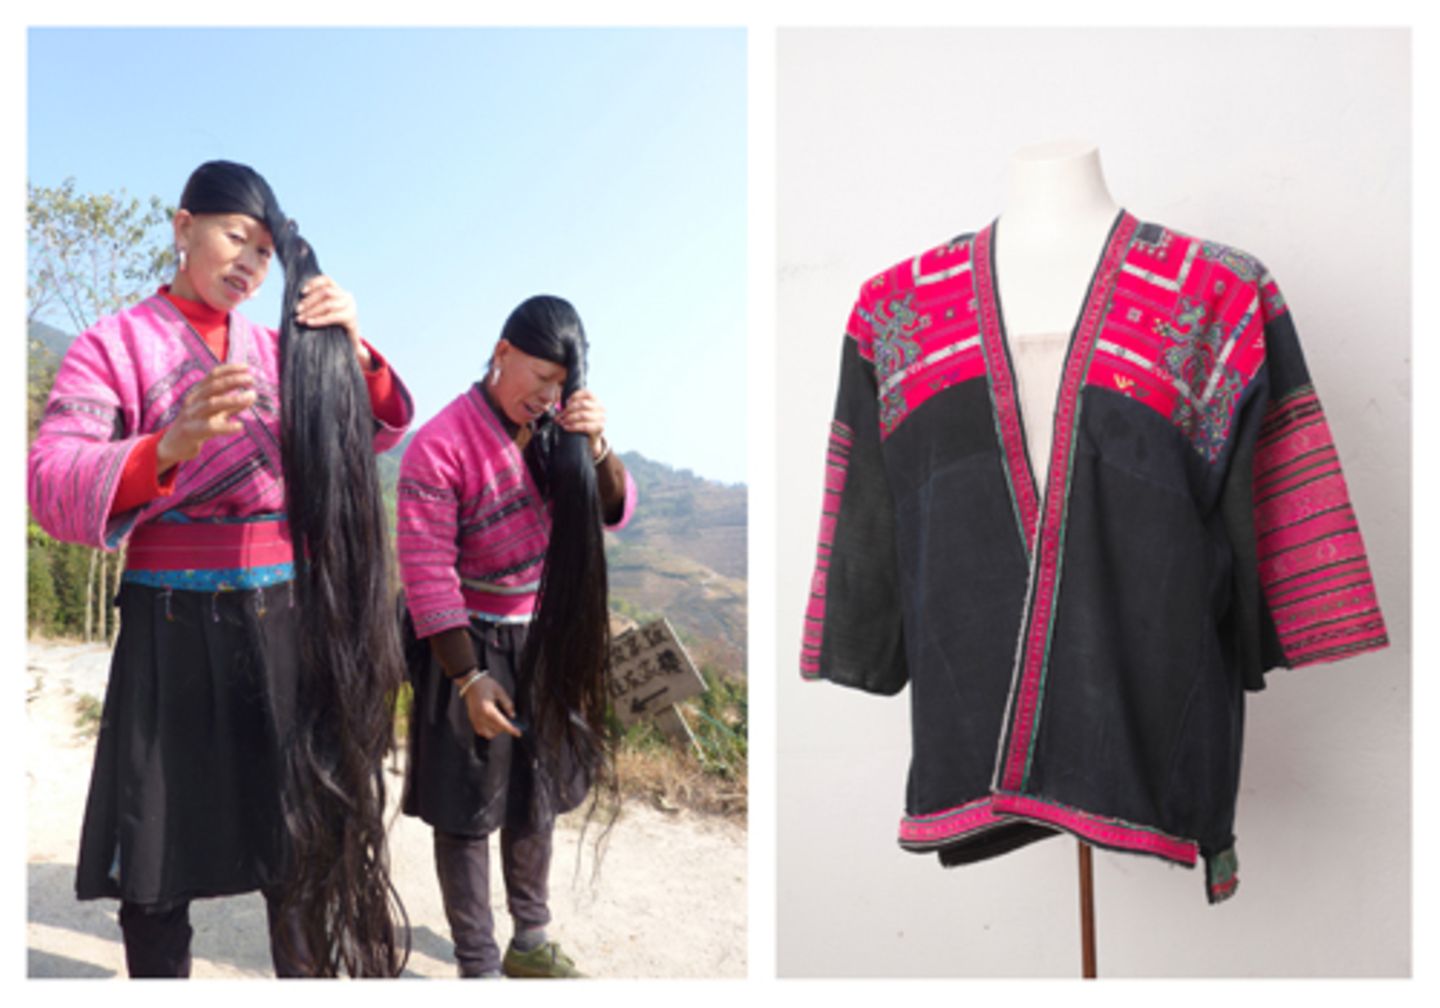 Yao-Frauen und -Jacke aus Longsheng, Guanxi, China.